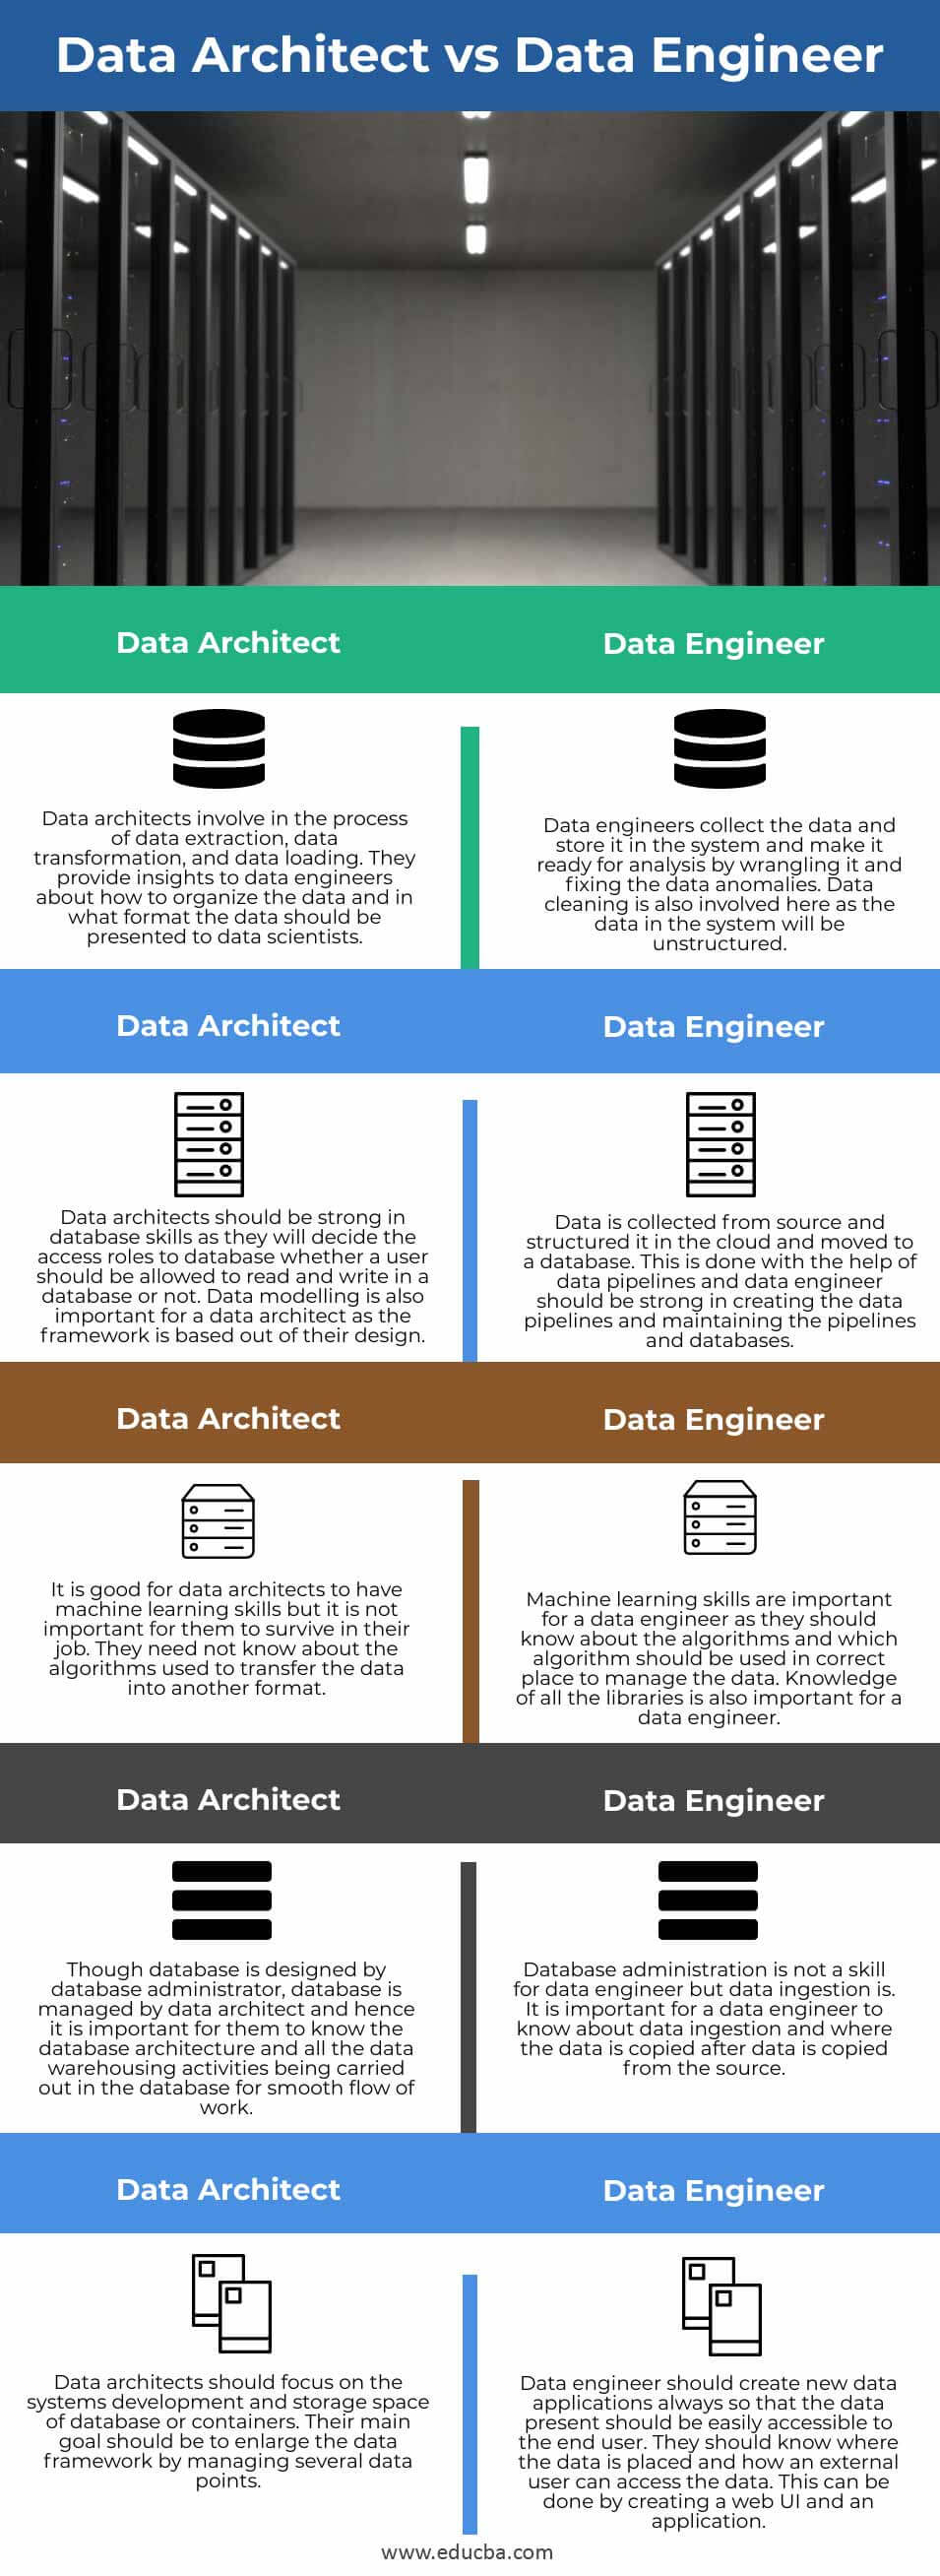 Data-Architect-vs-Data-Engineer-info